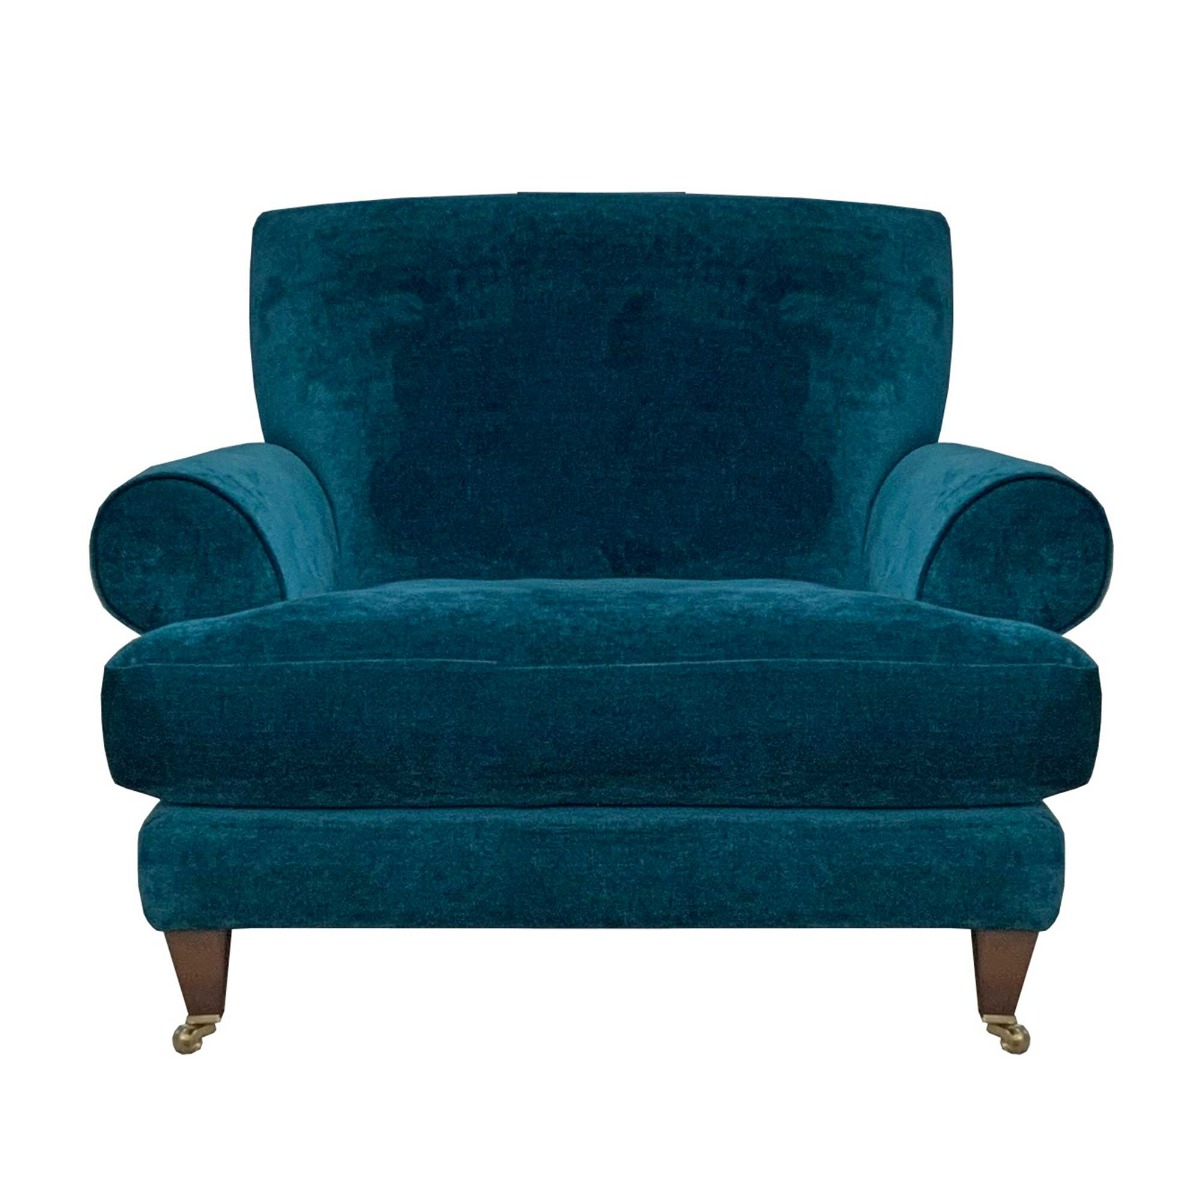 Fairlawn Standard Armchair, Teal Fabric | Barker & Stonehouse